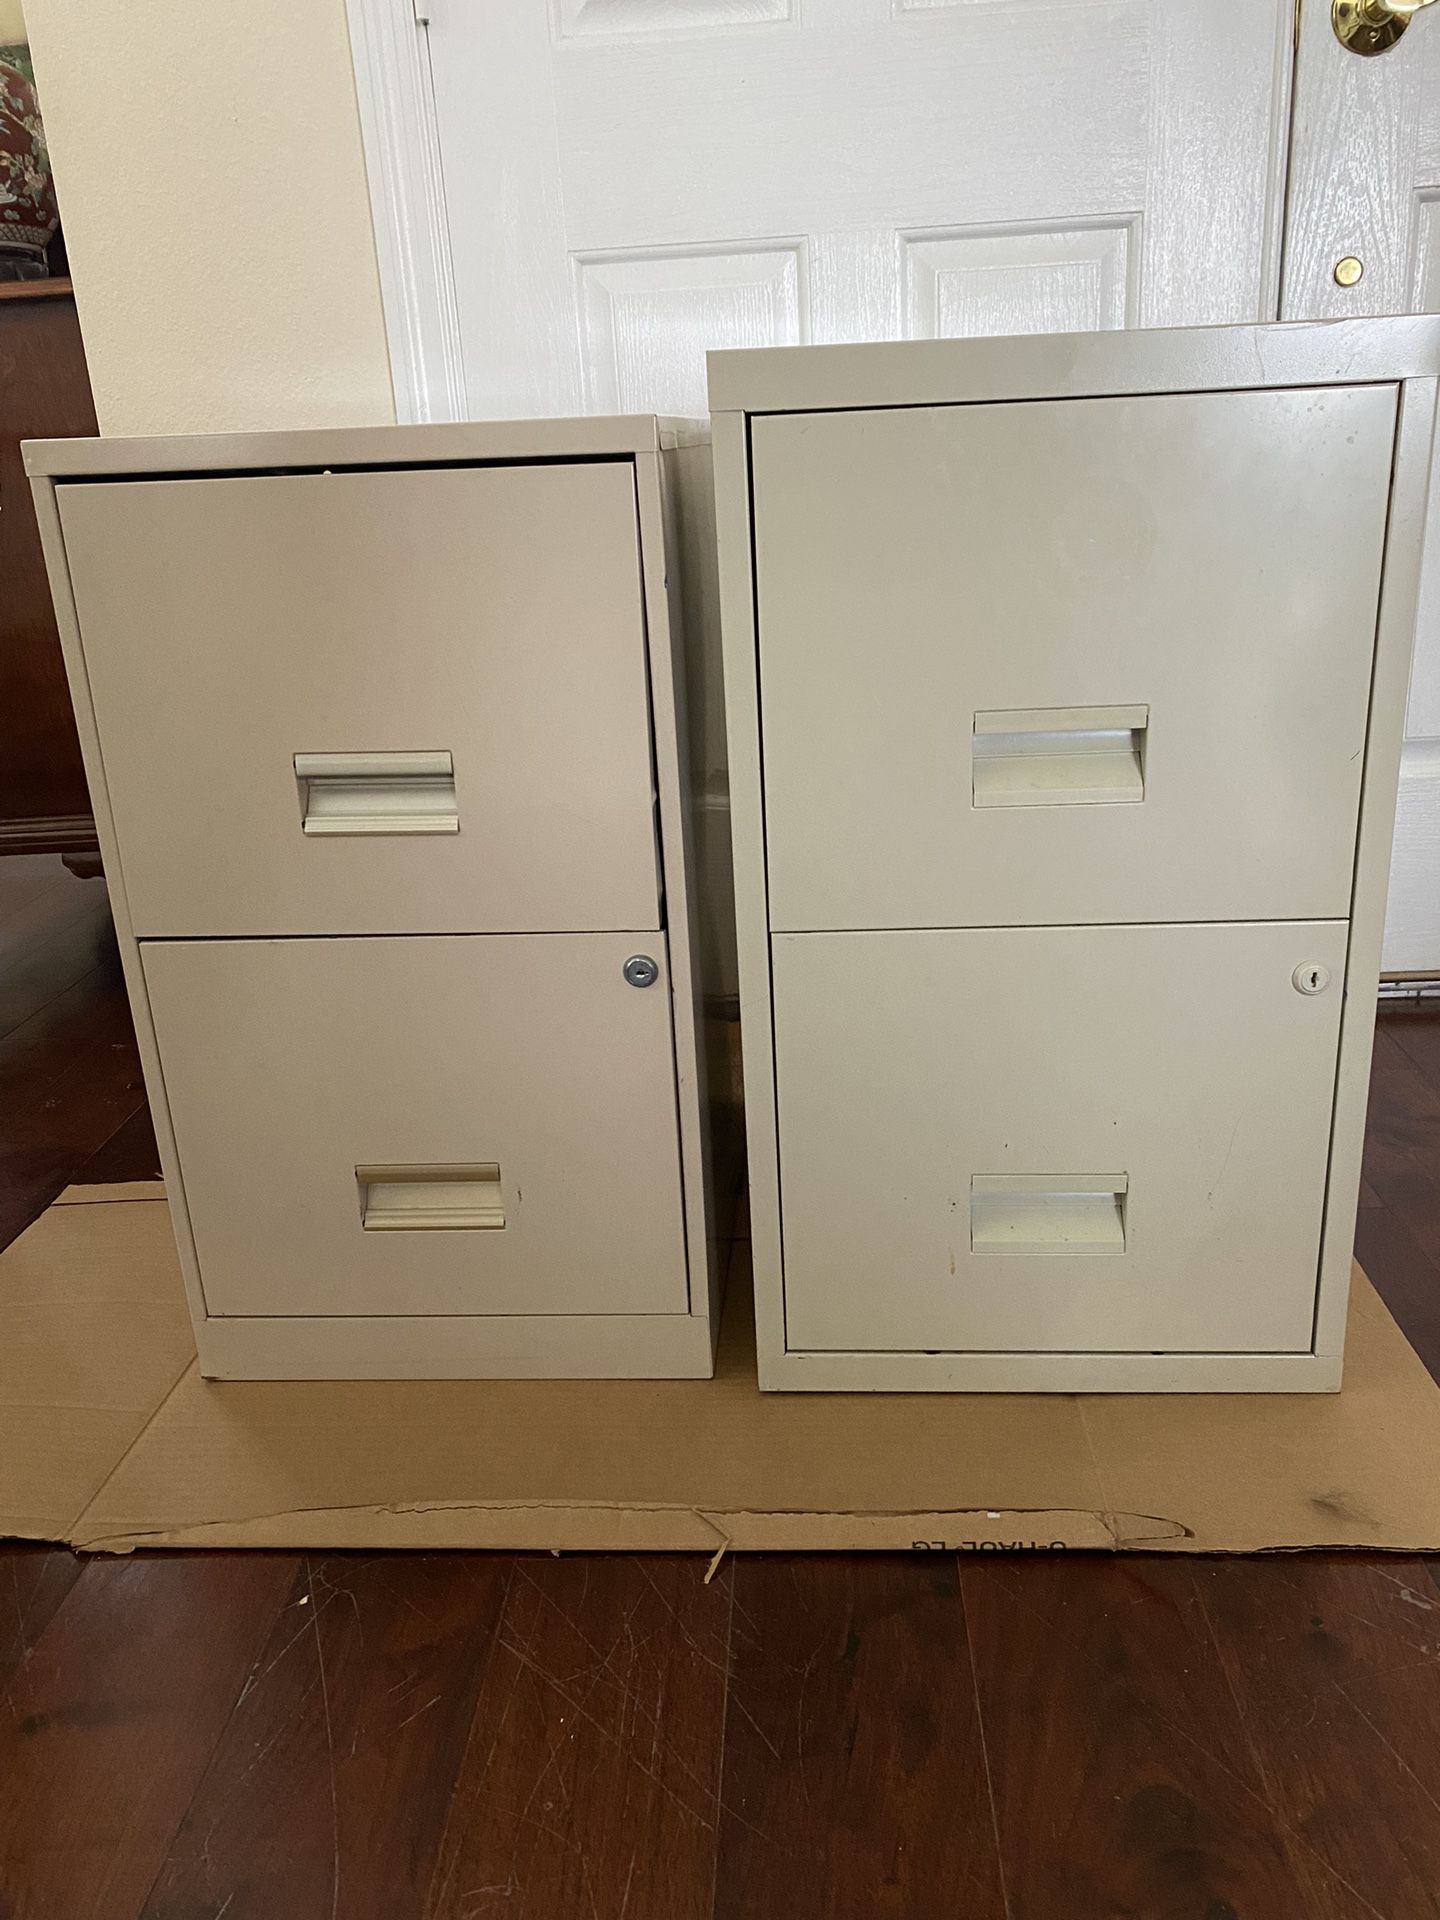 Set Of 2 Filing Cabinets 